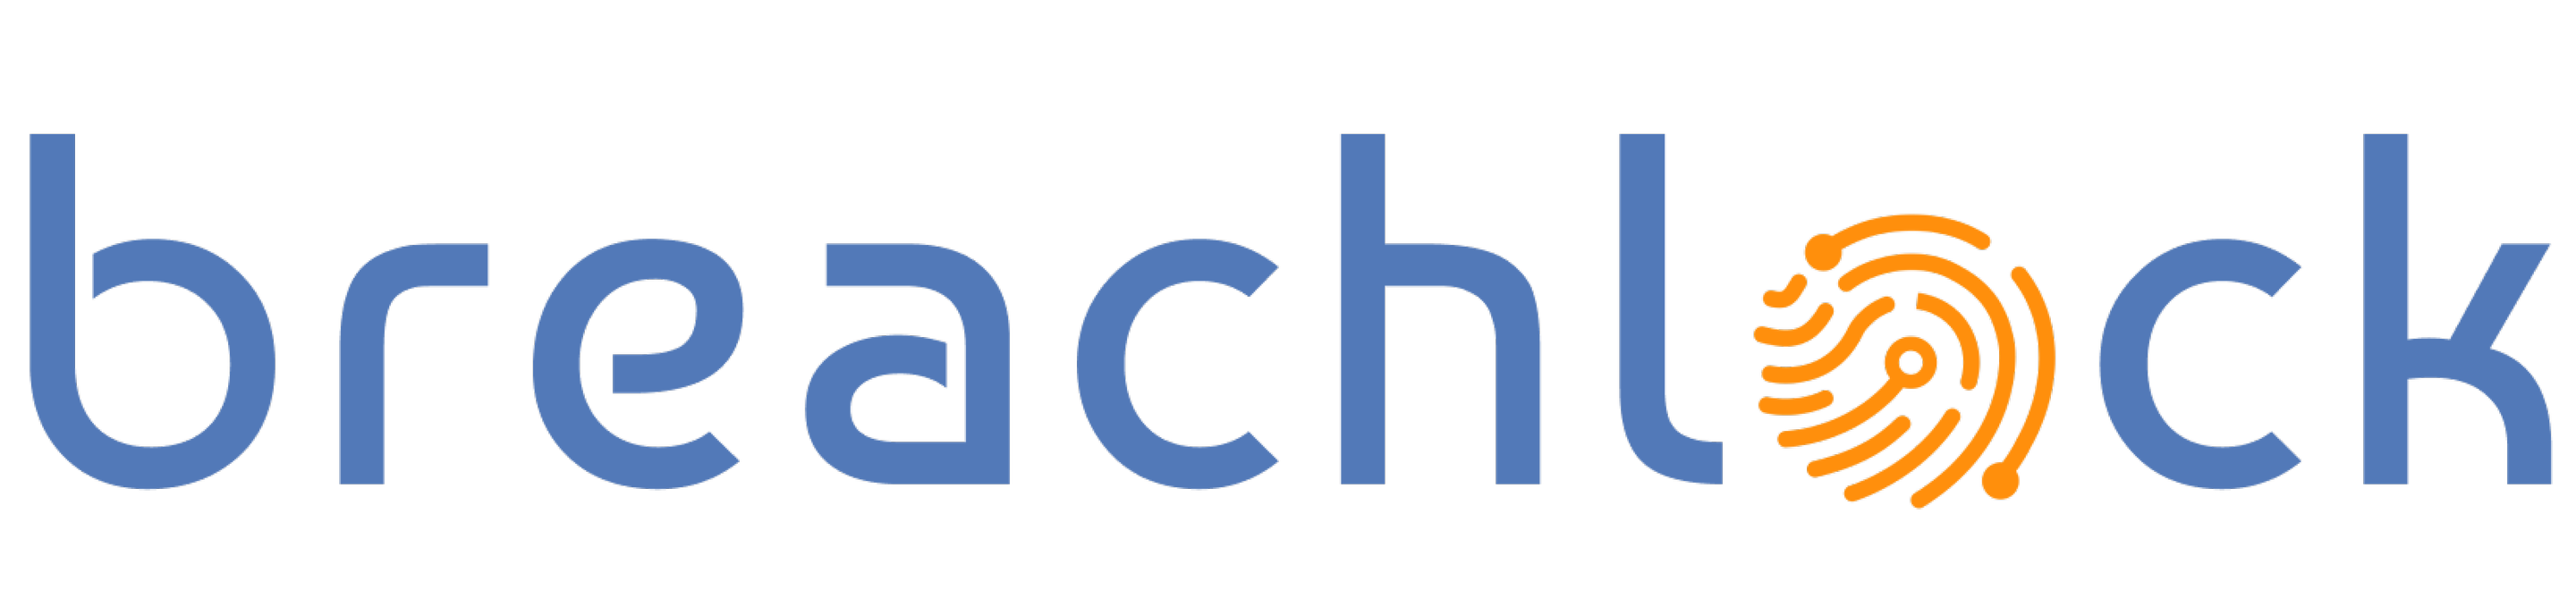 BreachLock logo